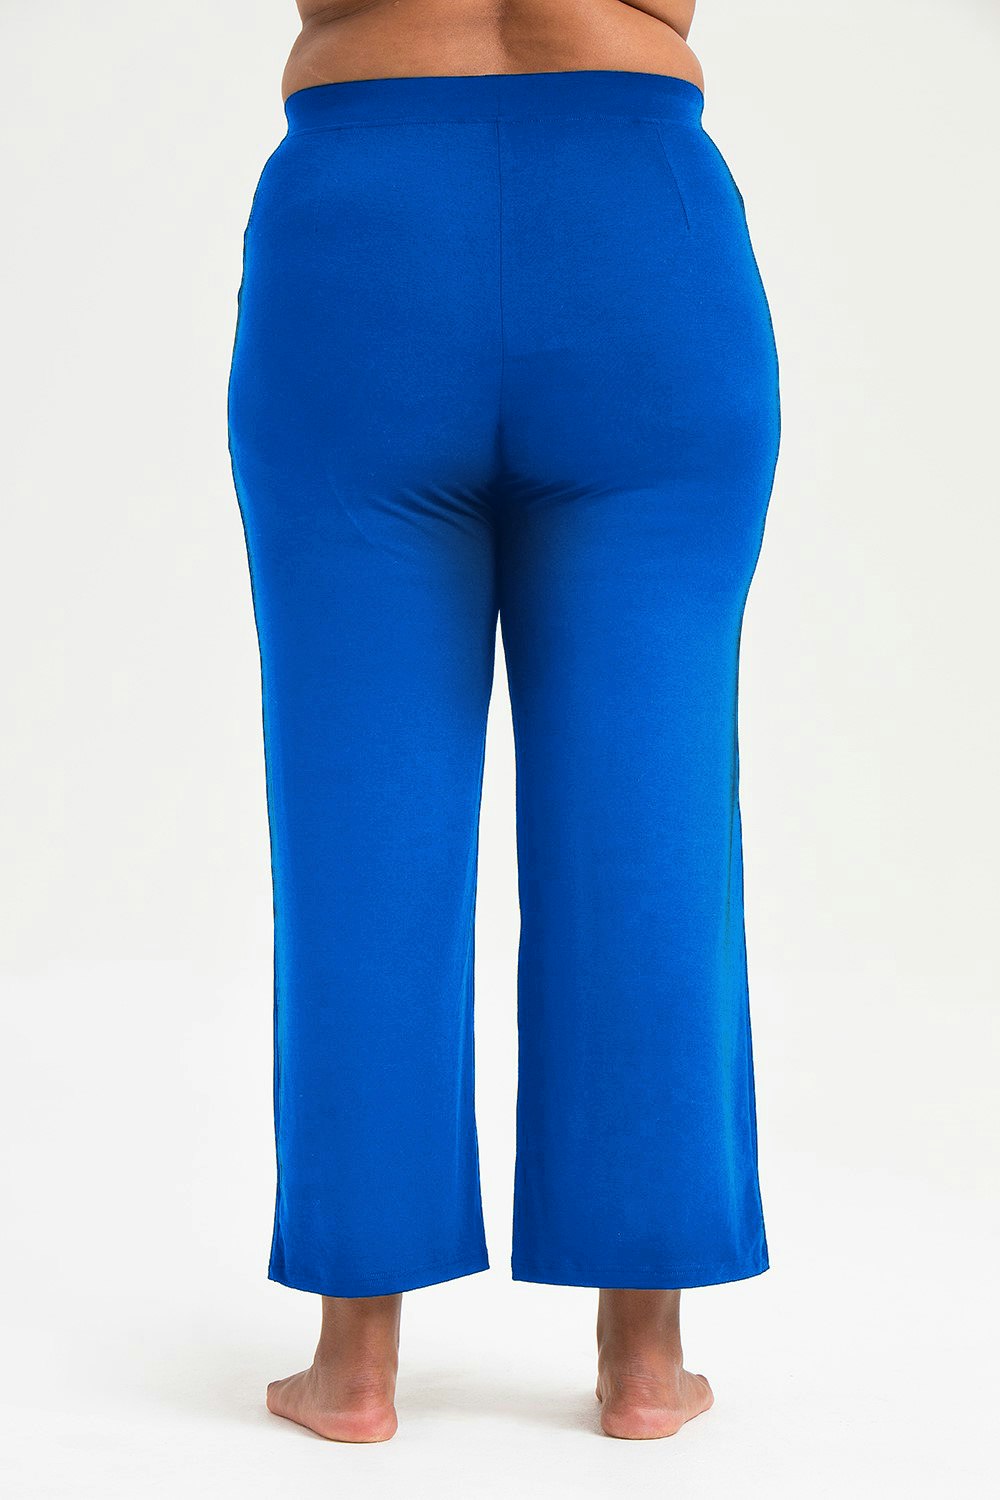 Arimi pants bright blue